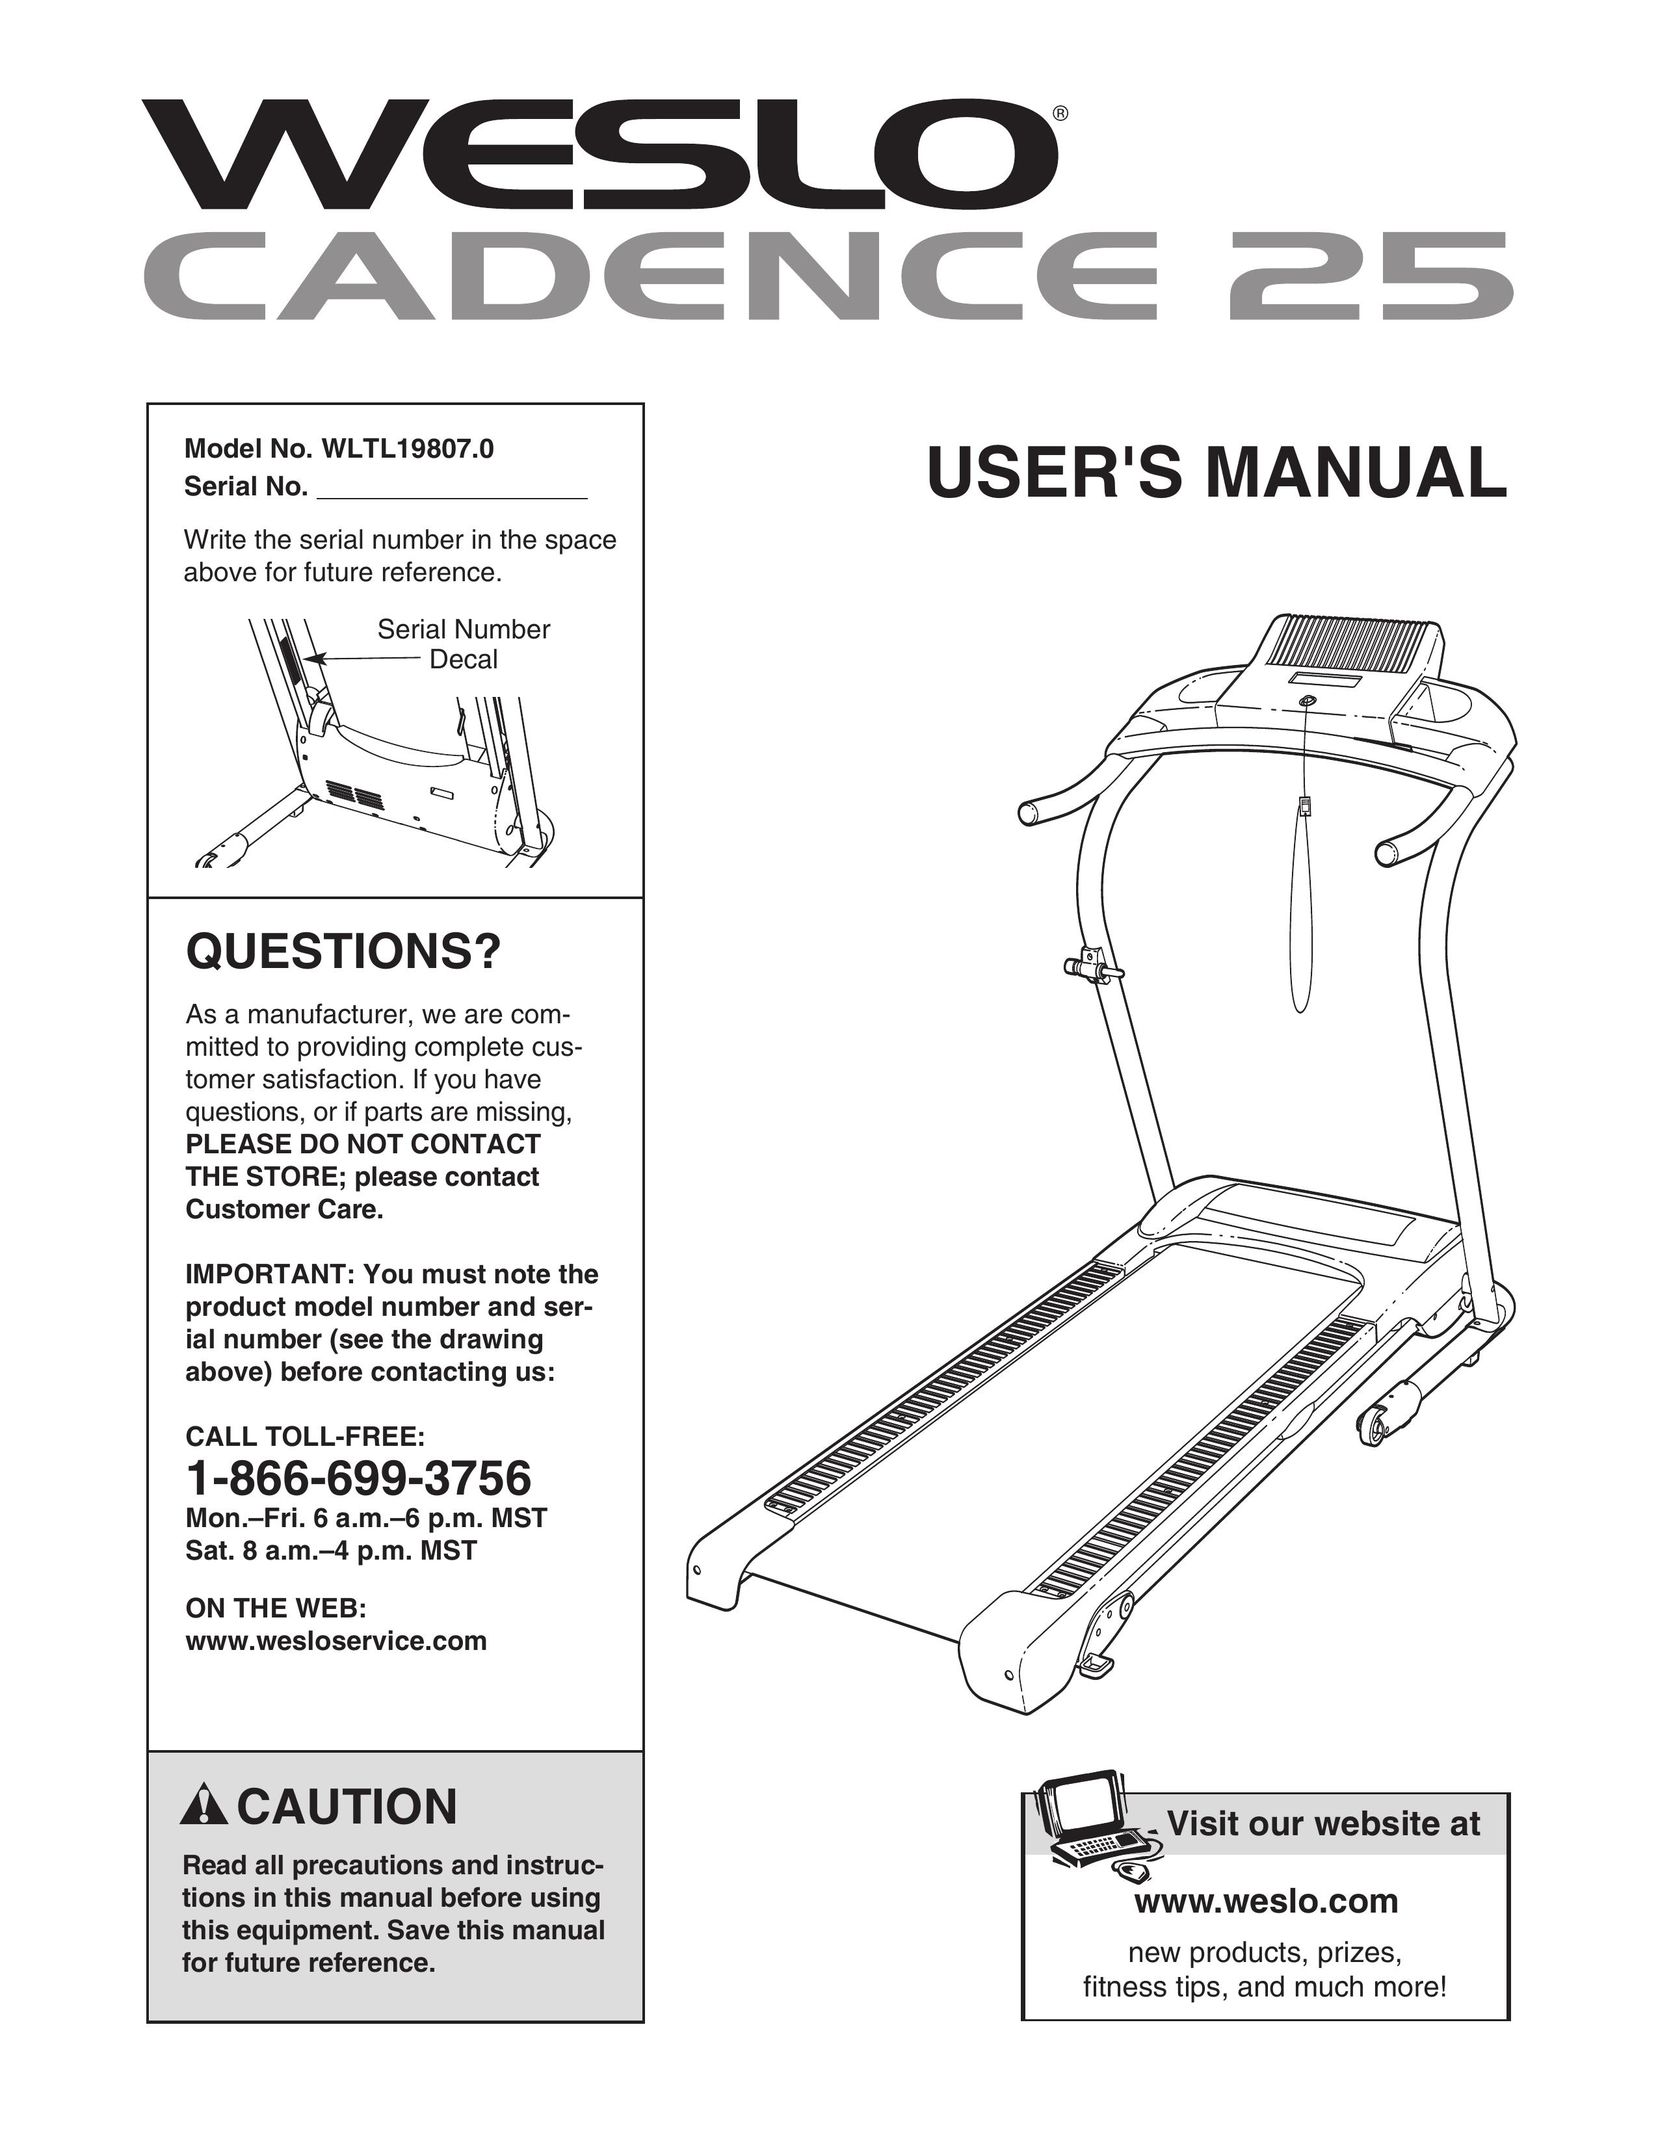 Weslo cadence 25 Treadmill User Manual